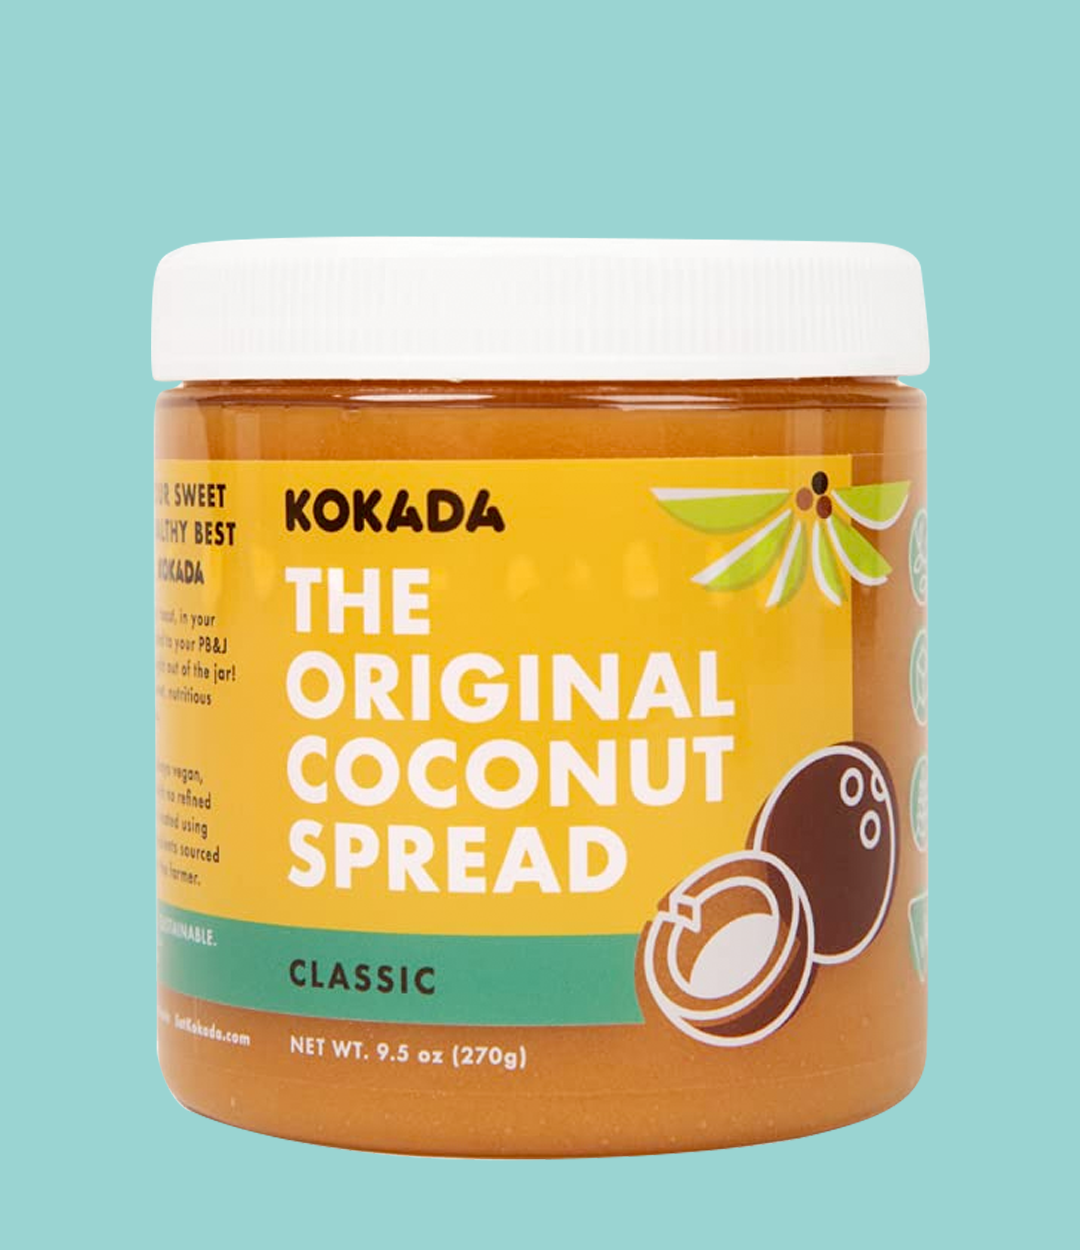 The Original Coconut Spread